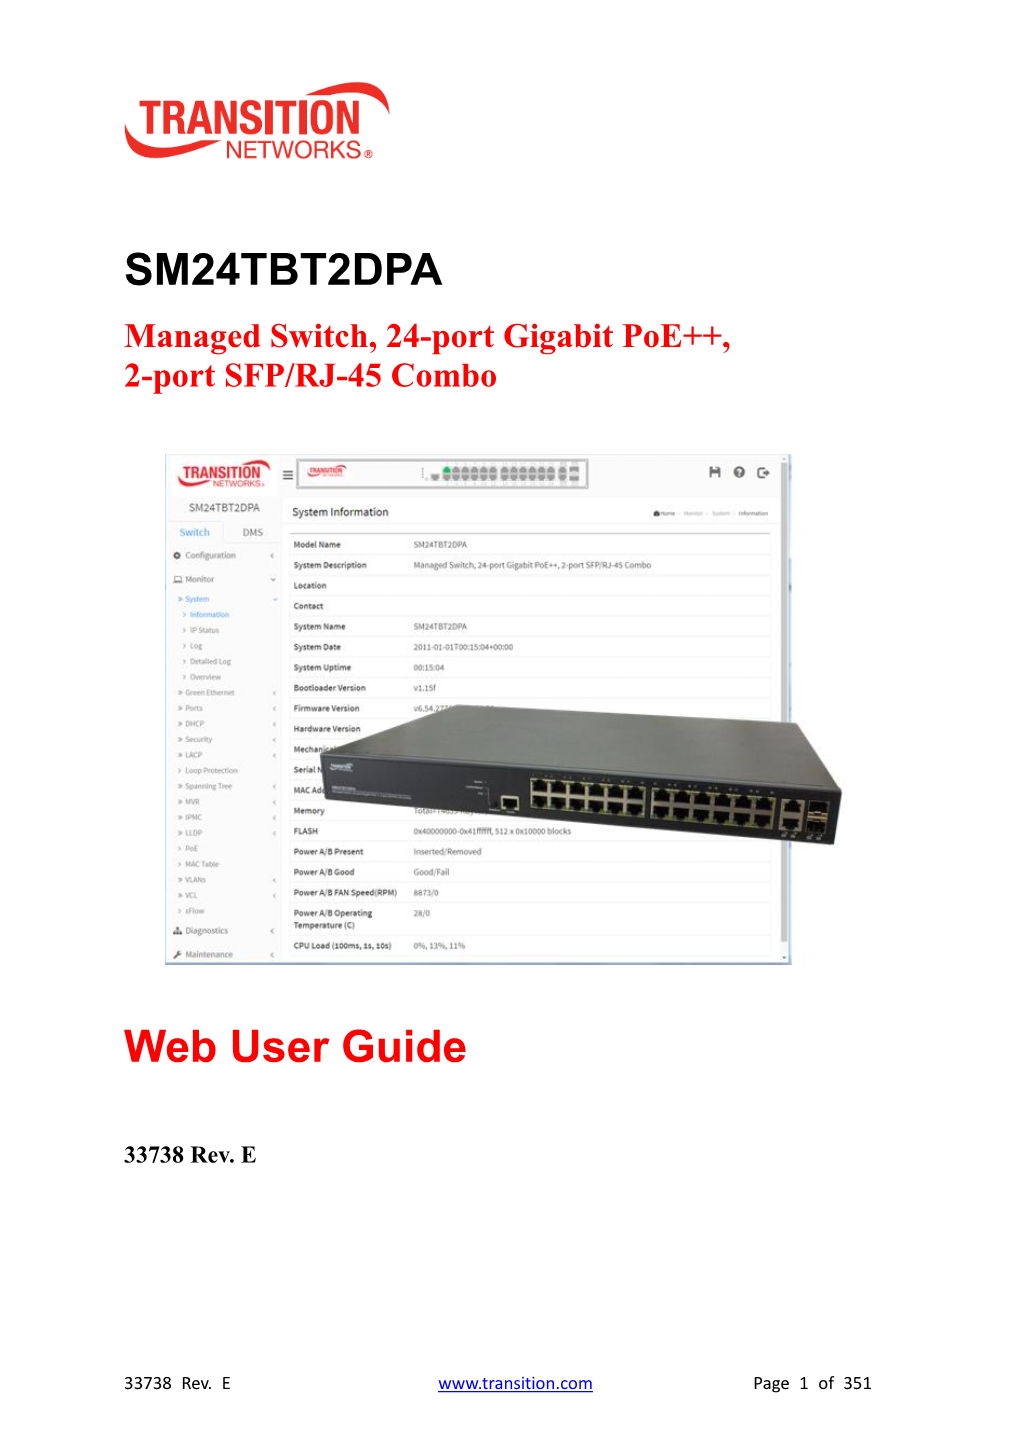 SM24TBT2DPA Web User Guide